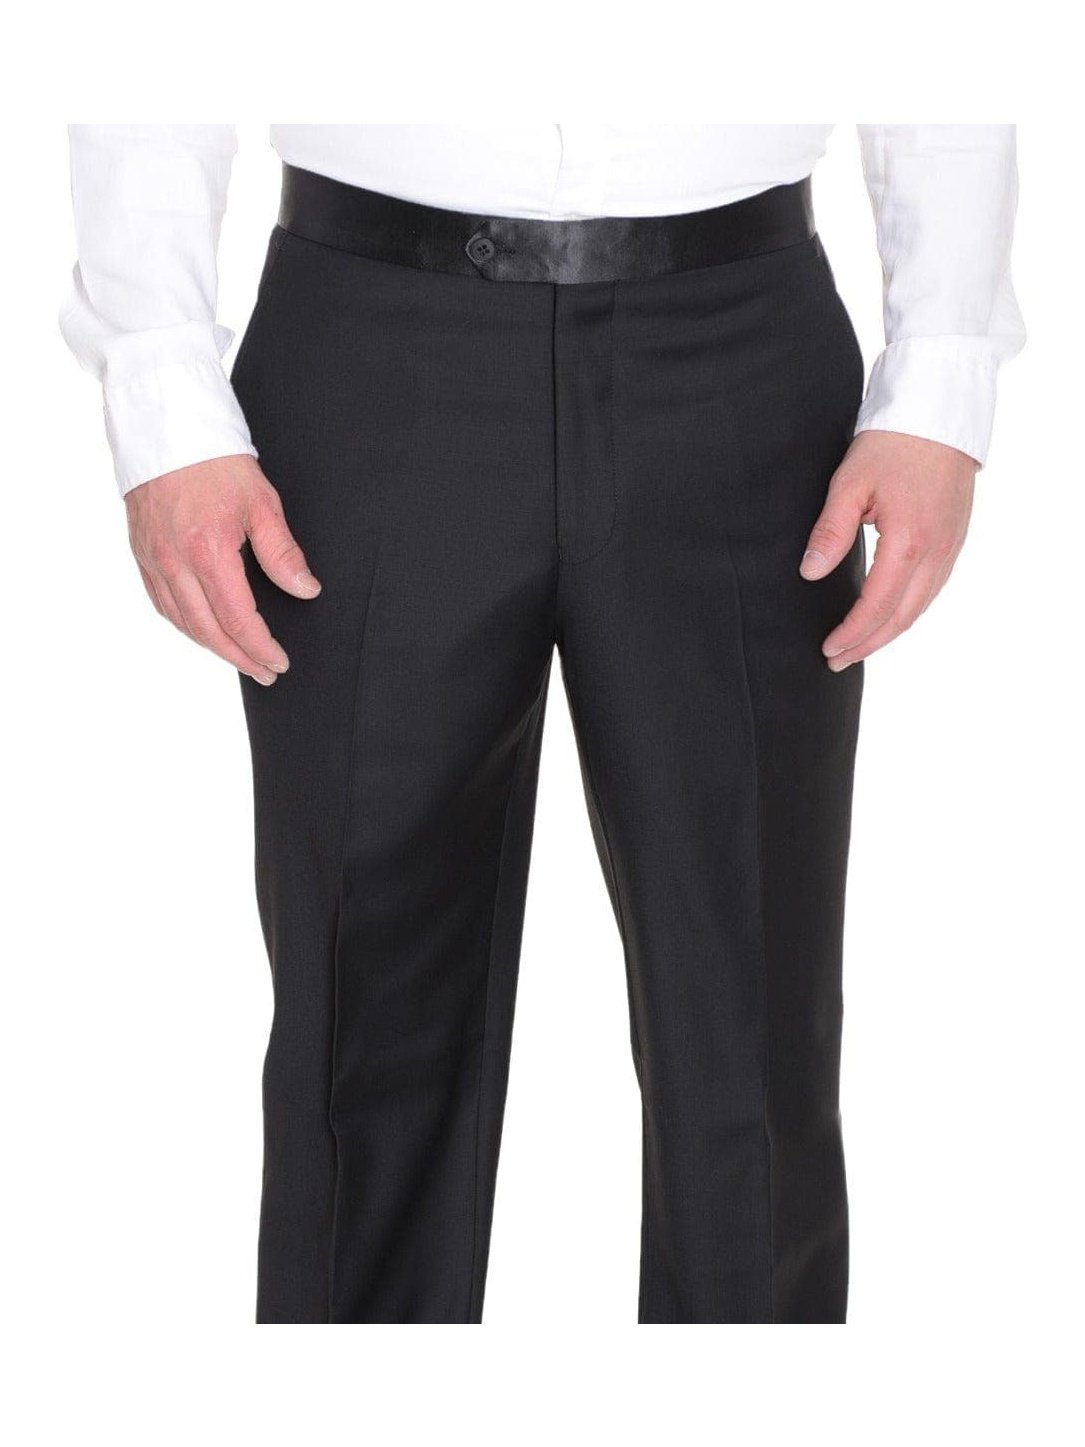 London Fog TUXEDOS Modern Fit Solid Black One Button Tuxedo Suit With Peak Lapels